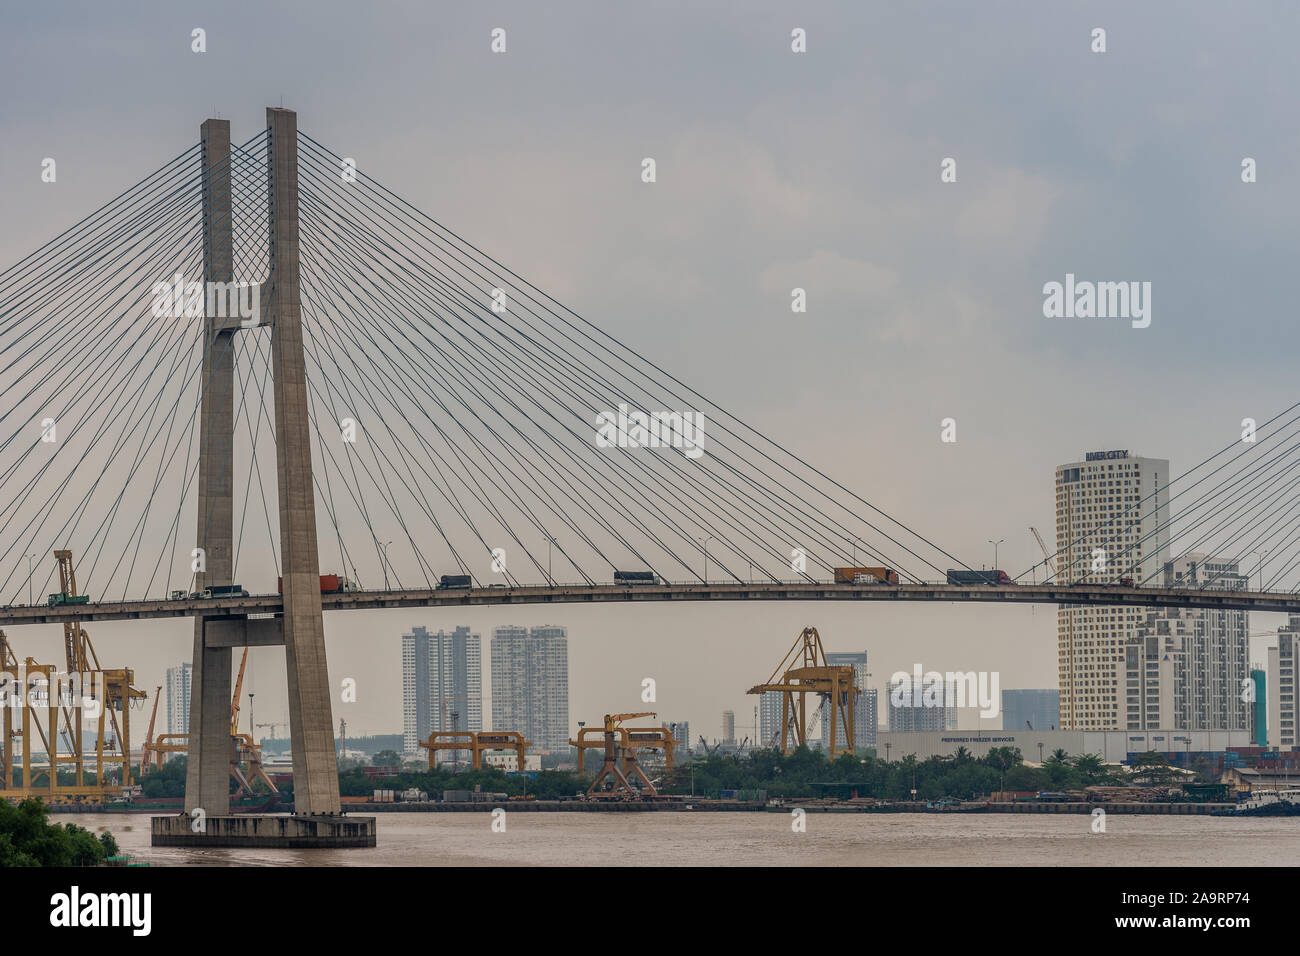 Ho Chi Minh City Vietnam - March 12, 2019: Looking soutj: Eastern pylon and span of Cau Phu My suspension bridge over Song Sai Gon river under light b Stock Photo